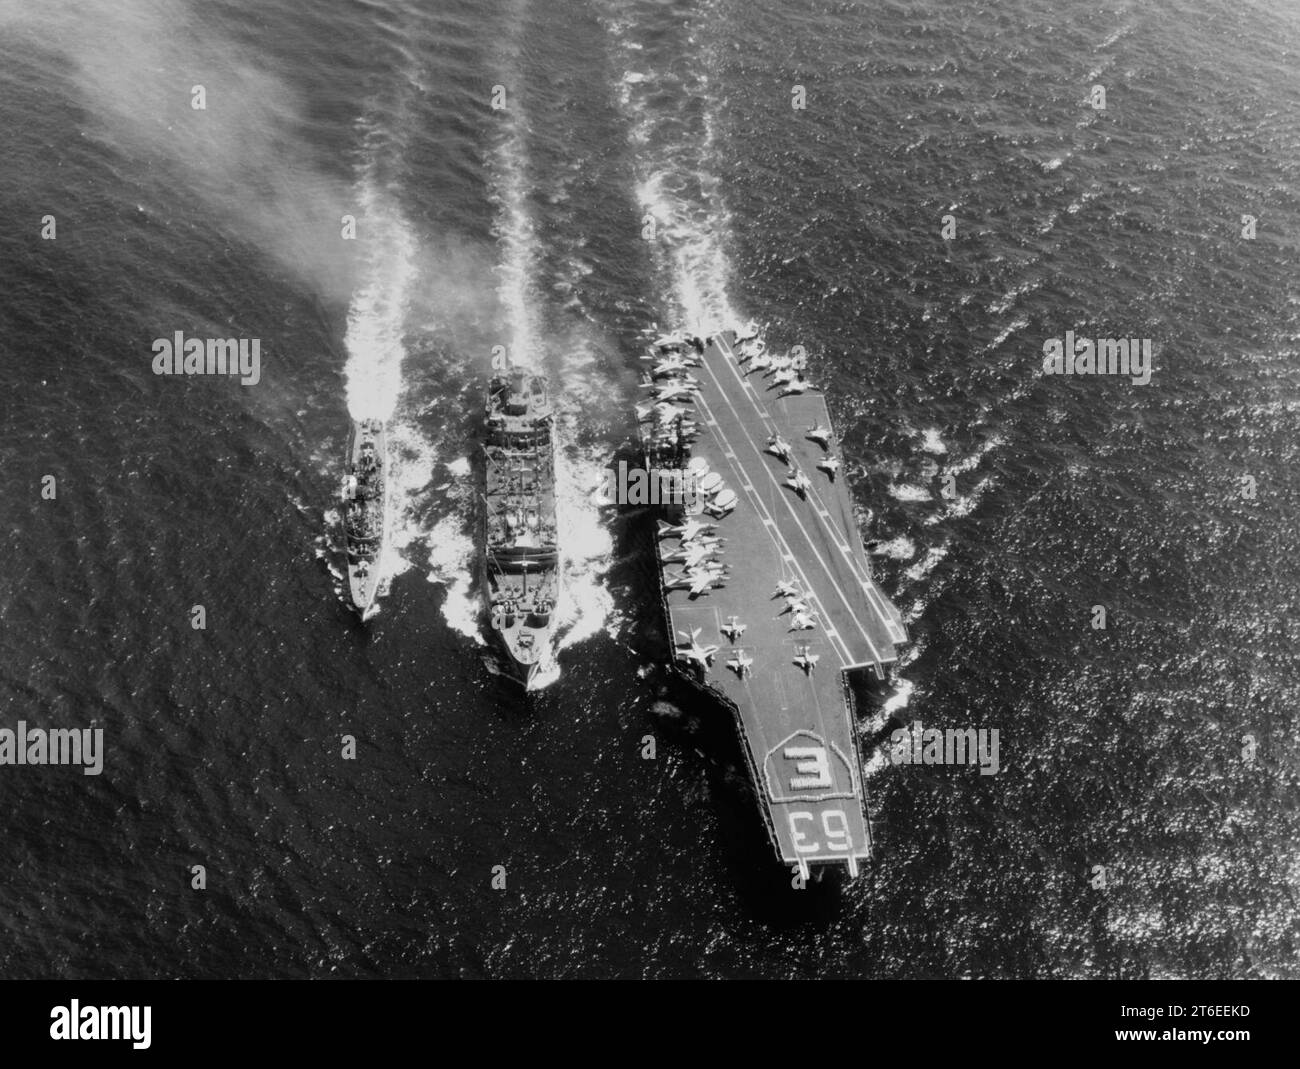 USS Kitty Hawk (CVA-63) and USS Turner Joy (DD-951) refueling from USS Kawishiwi (AO-146) on 23 April 1964 Stock Photo